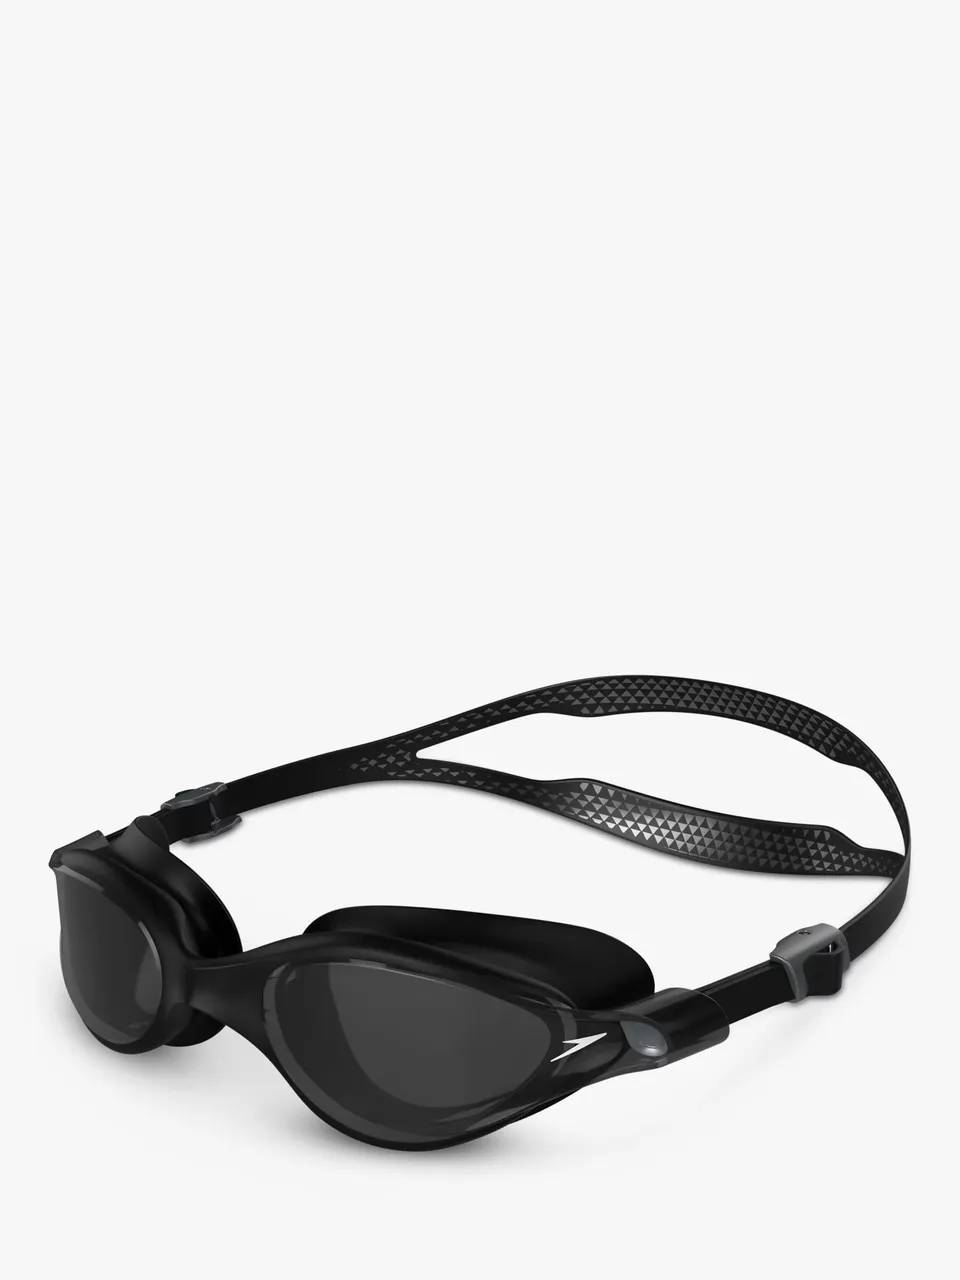 Speedo Vue Swimming Goggles, Black/Silver - Black/Silver - Unisex